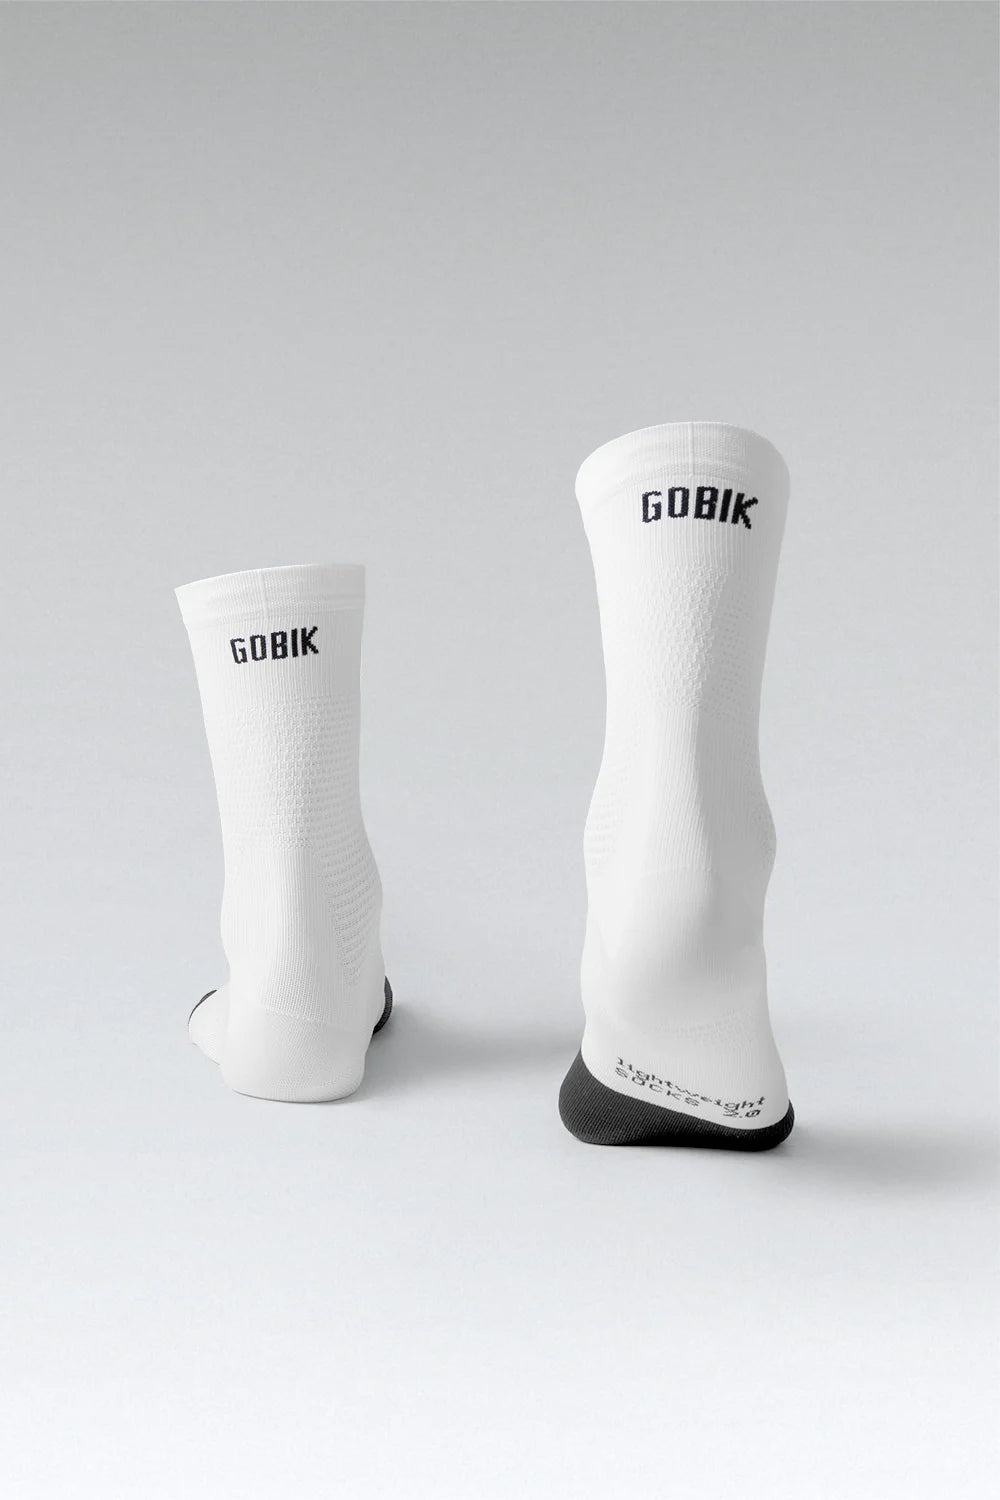 Ineos Grenadiers Lightweight Unisex Socks